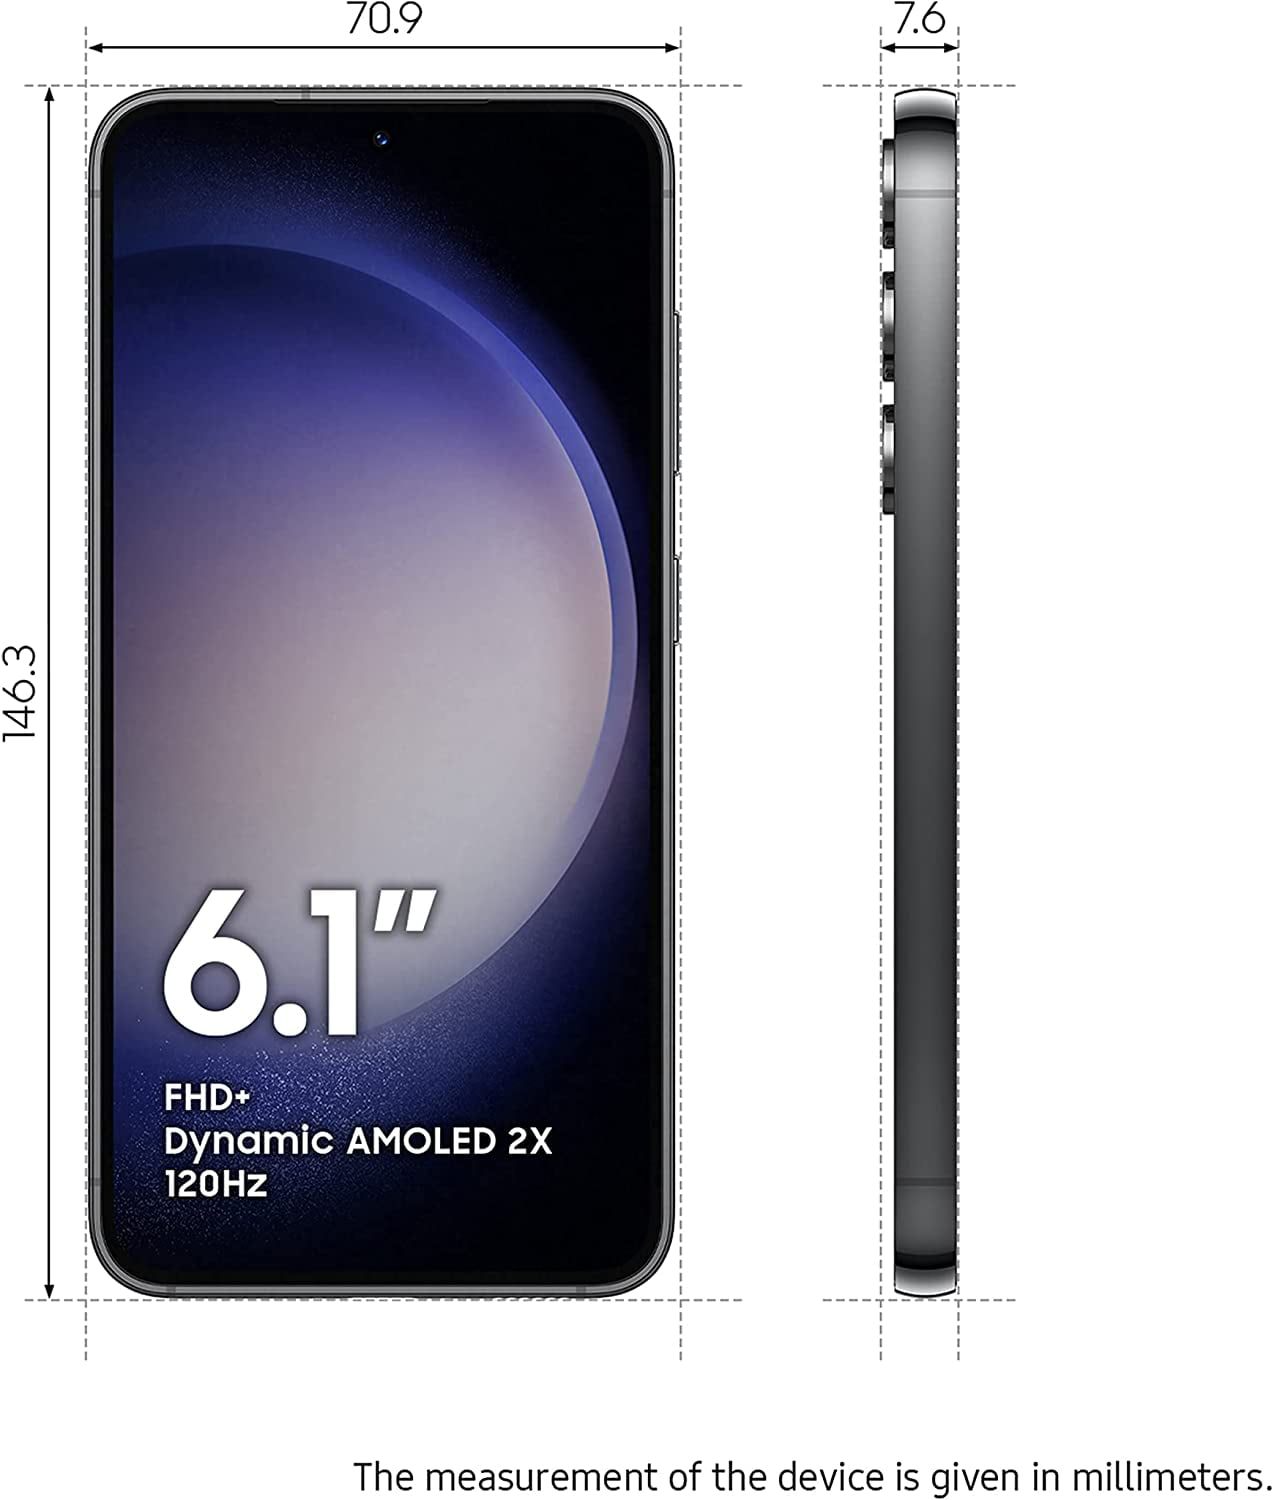 Samsung Galaxy S23 STANDARD EDITION Dual-SIM 256GB ROM + 8GB RAM (Only GSM  | No CDMA) Factory Unlocked 5G Smartphone (Green) - International Version